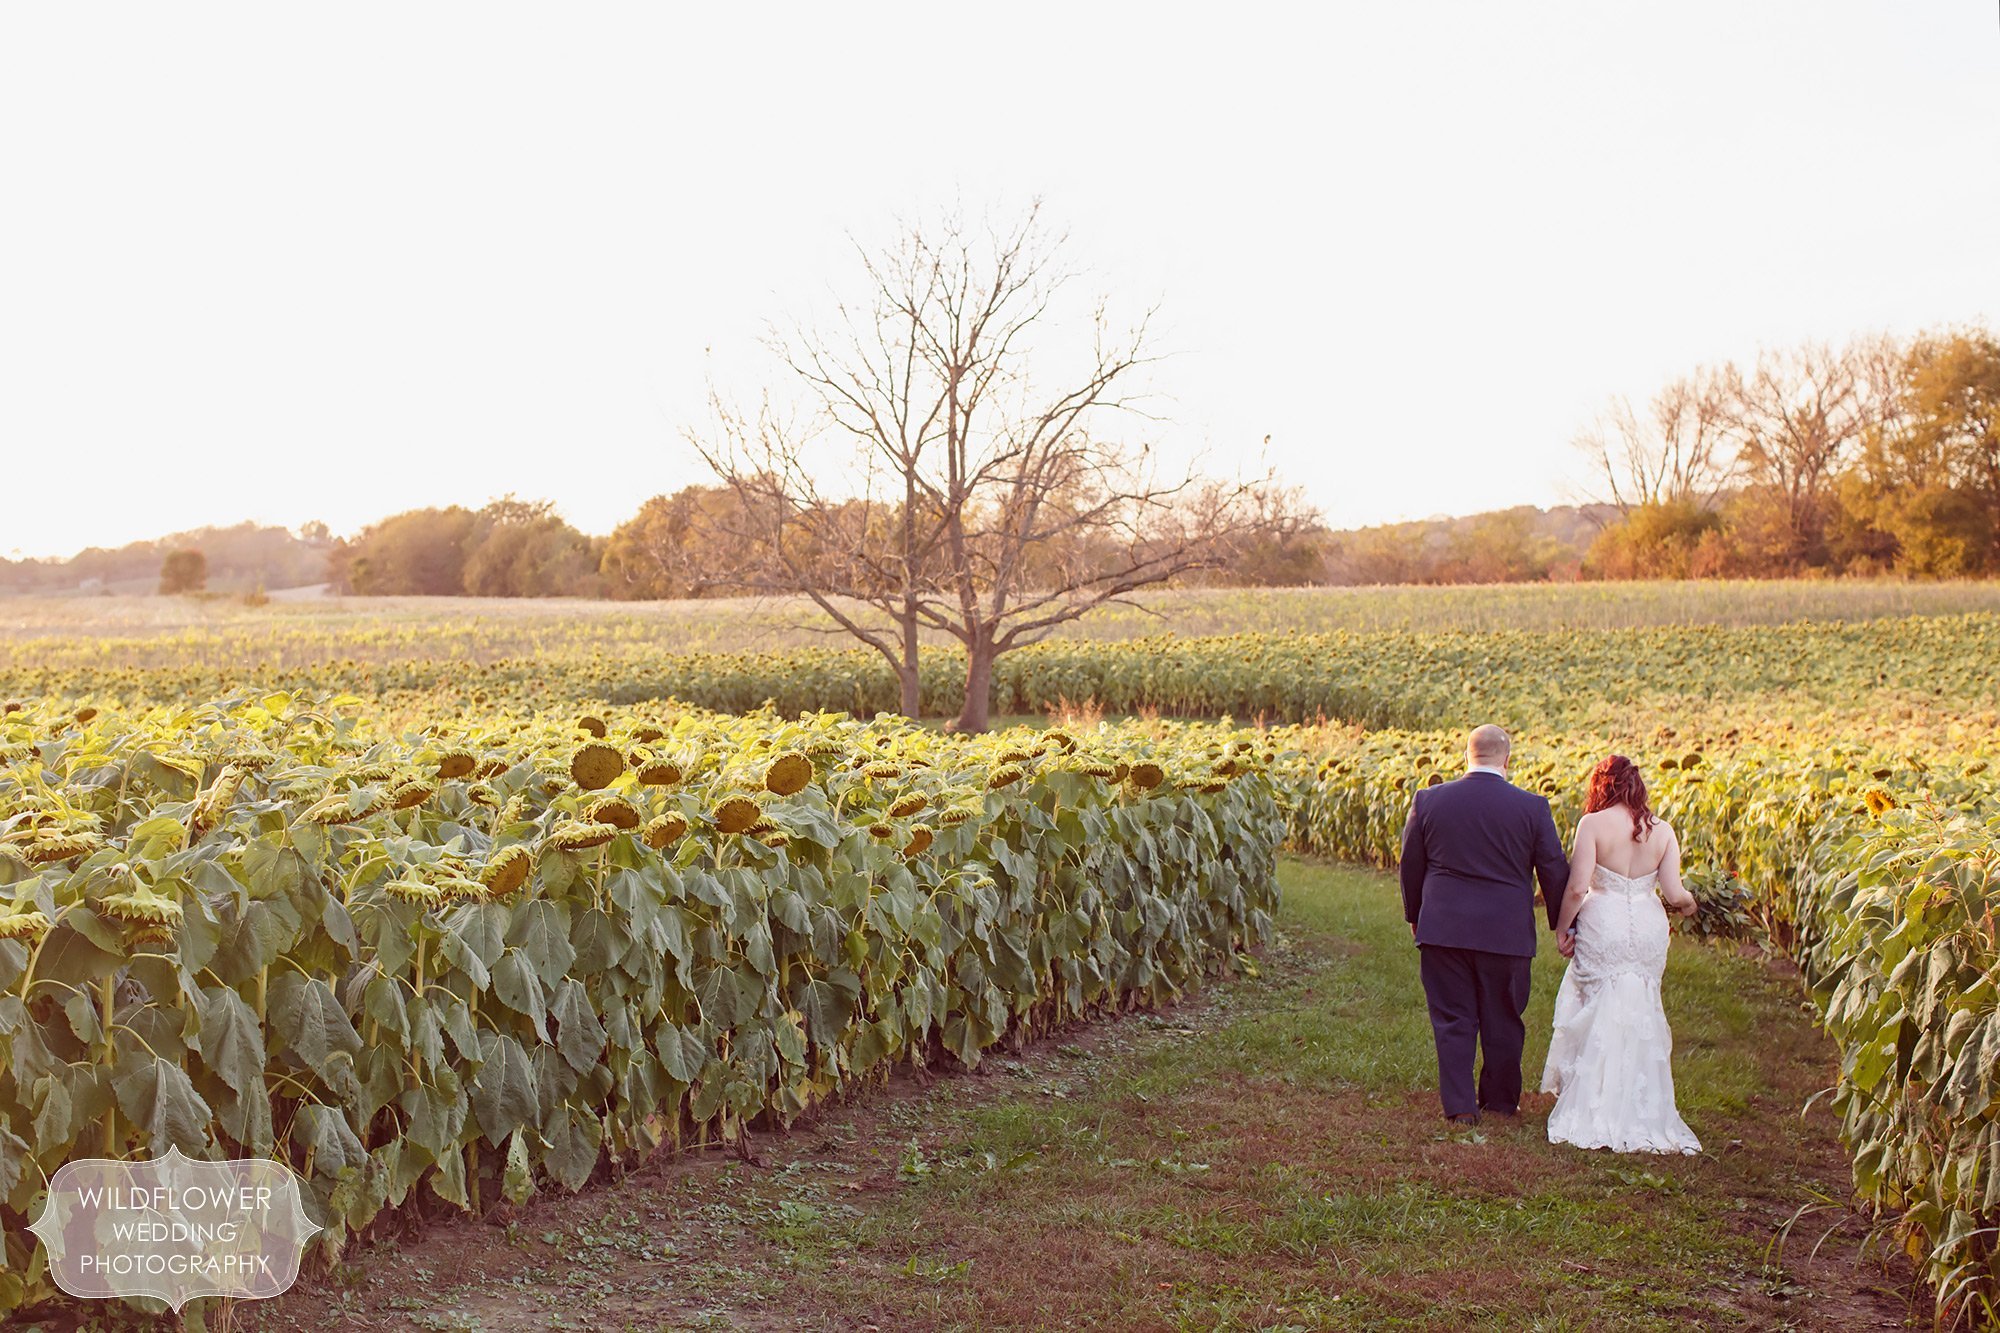 Bride and groom walk through a field of sunflowers after their Schwinn Produce Farm wedding in KS.